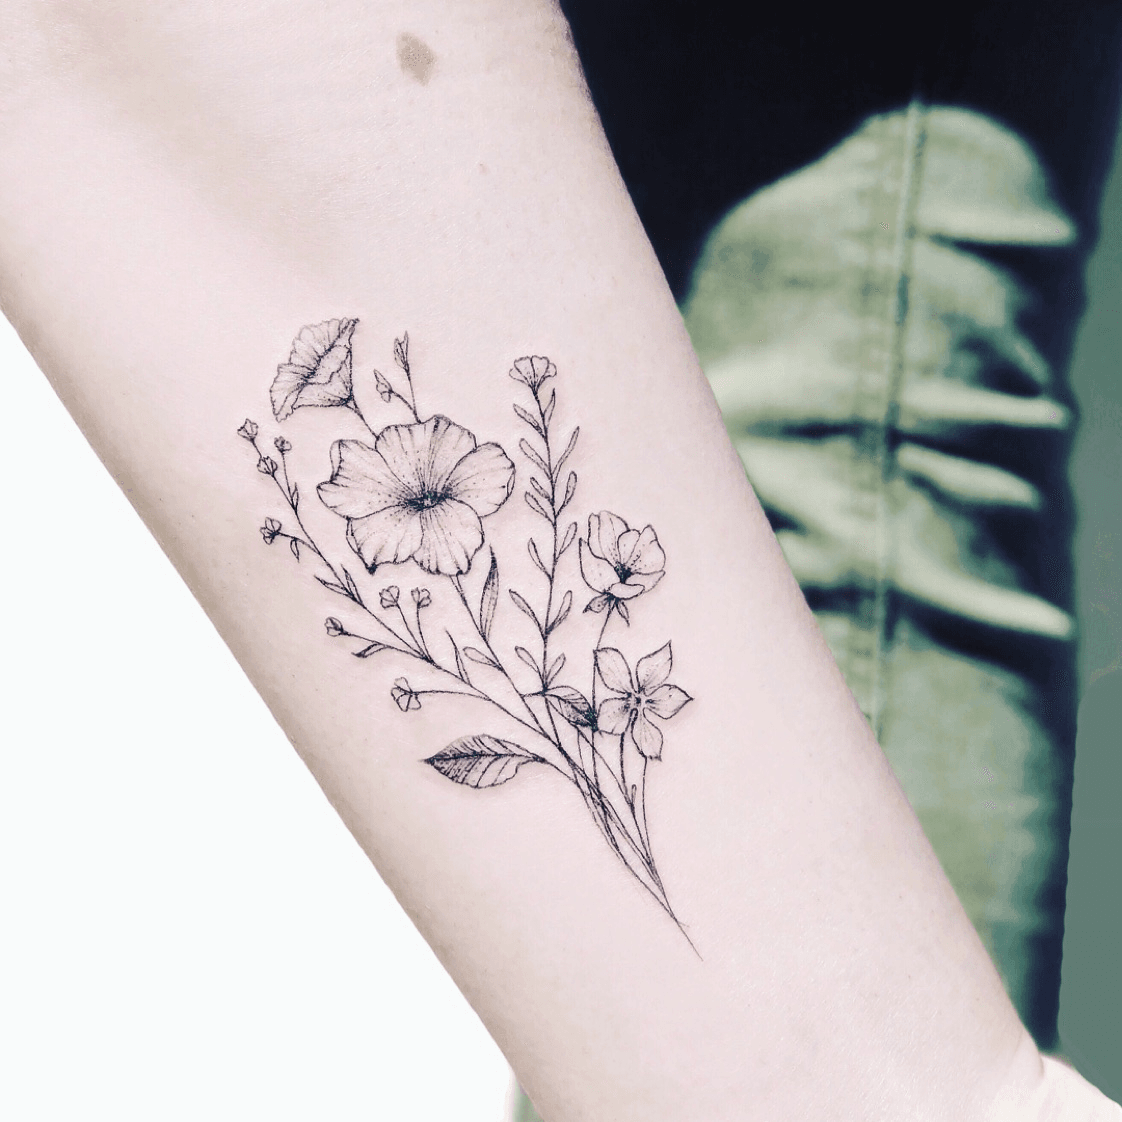 violet tattoo flowerTikTok Search